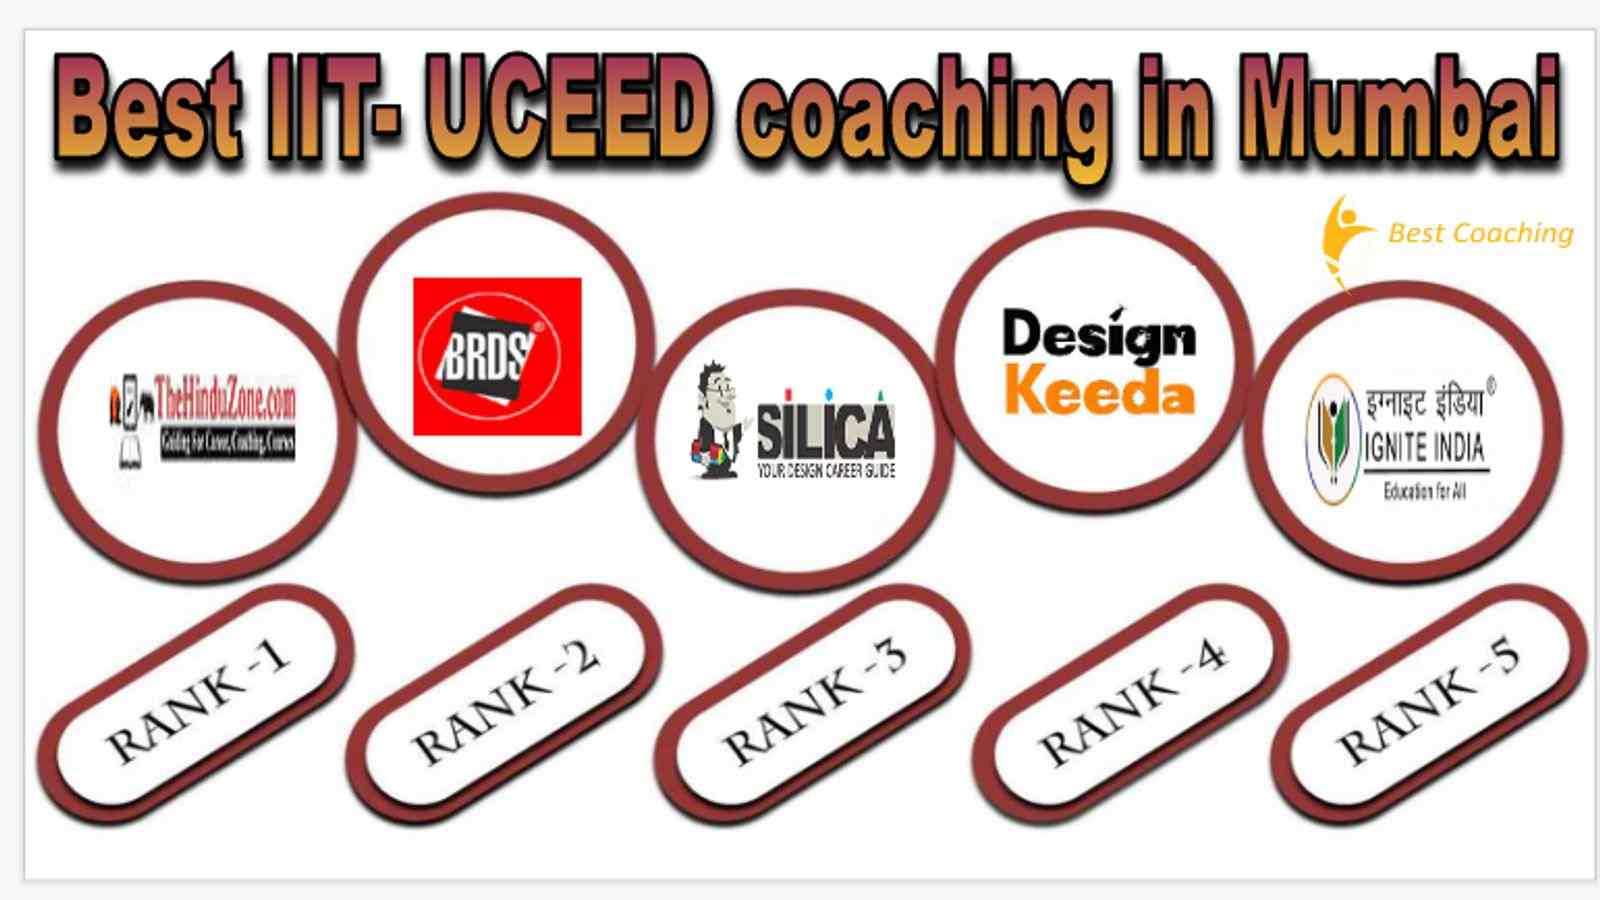 Best IIT- UCEED coaching in Mumbai